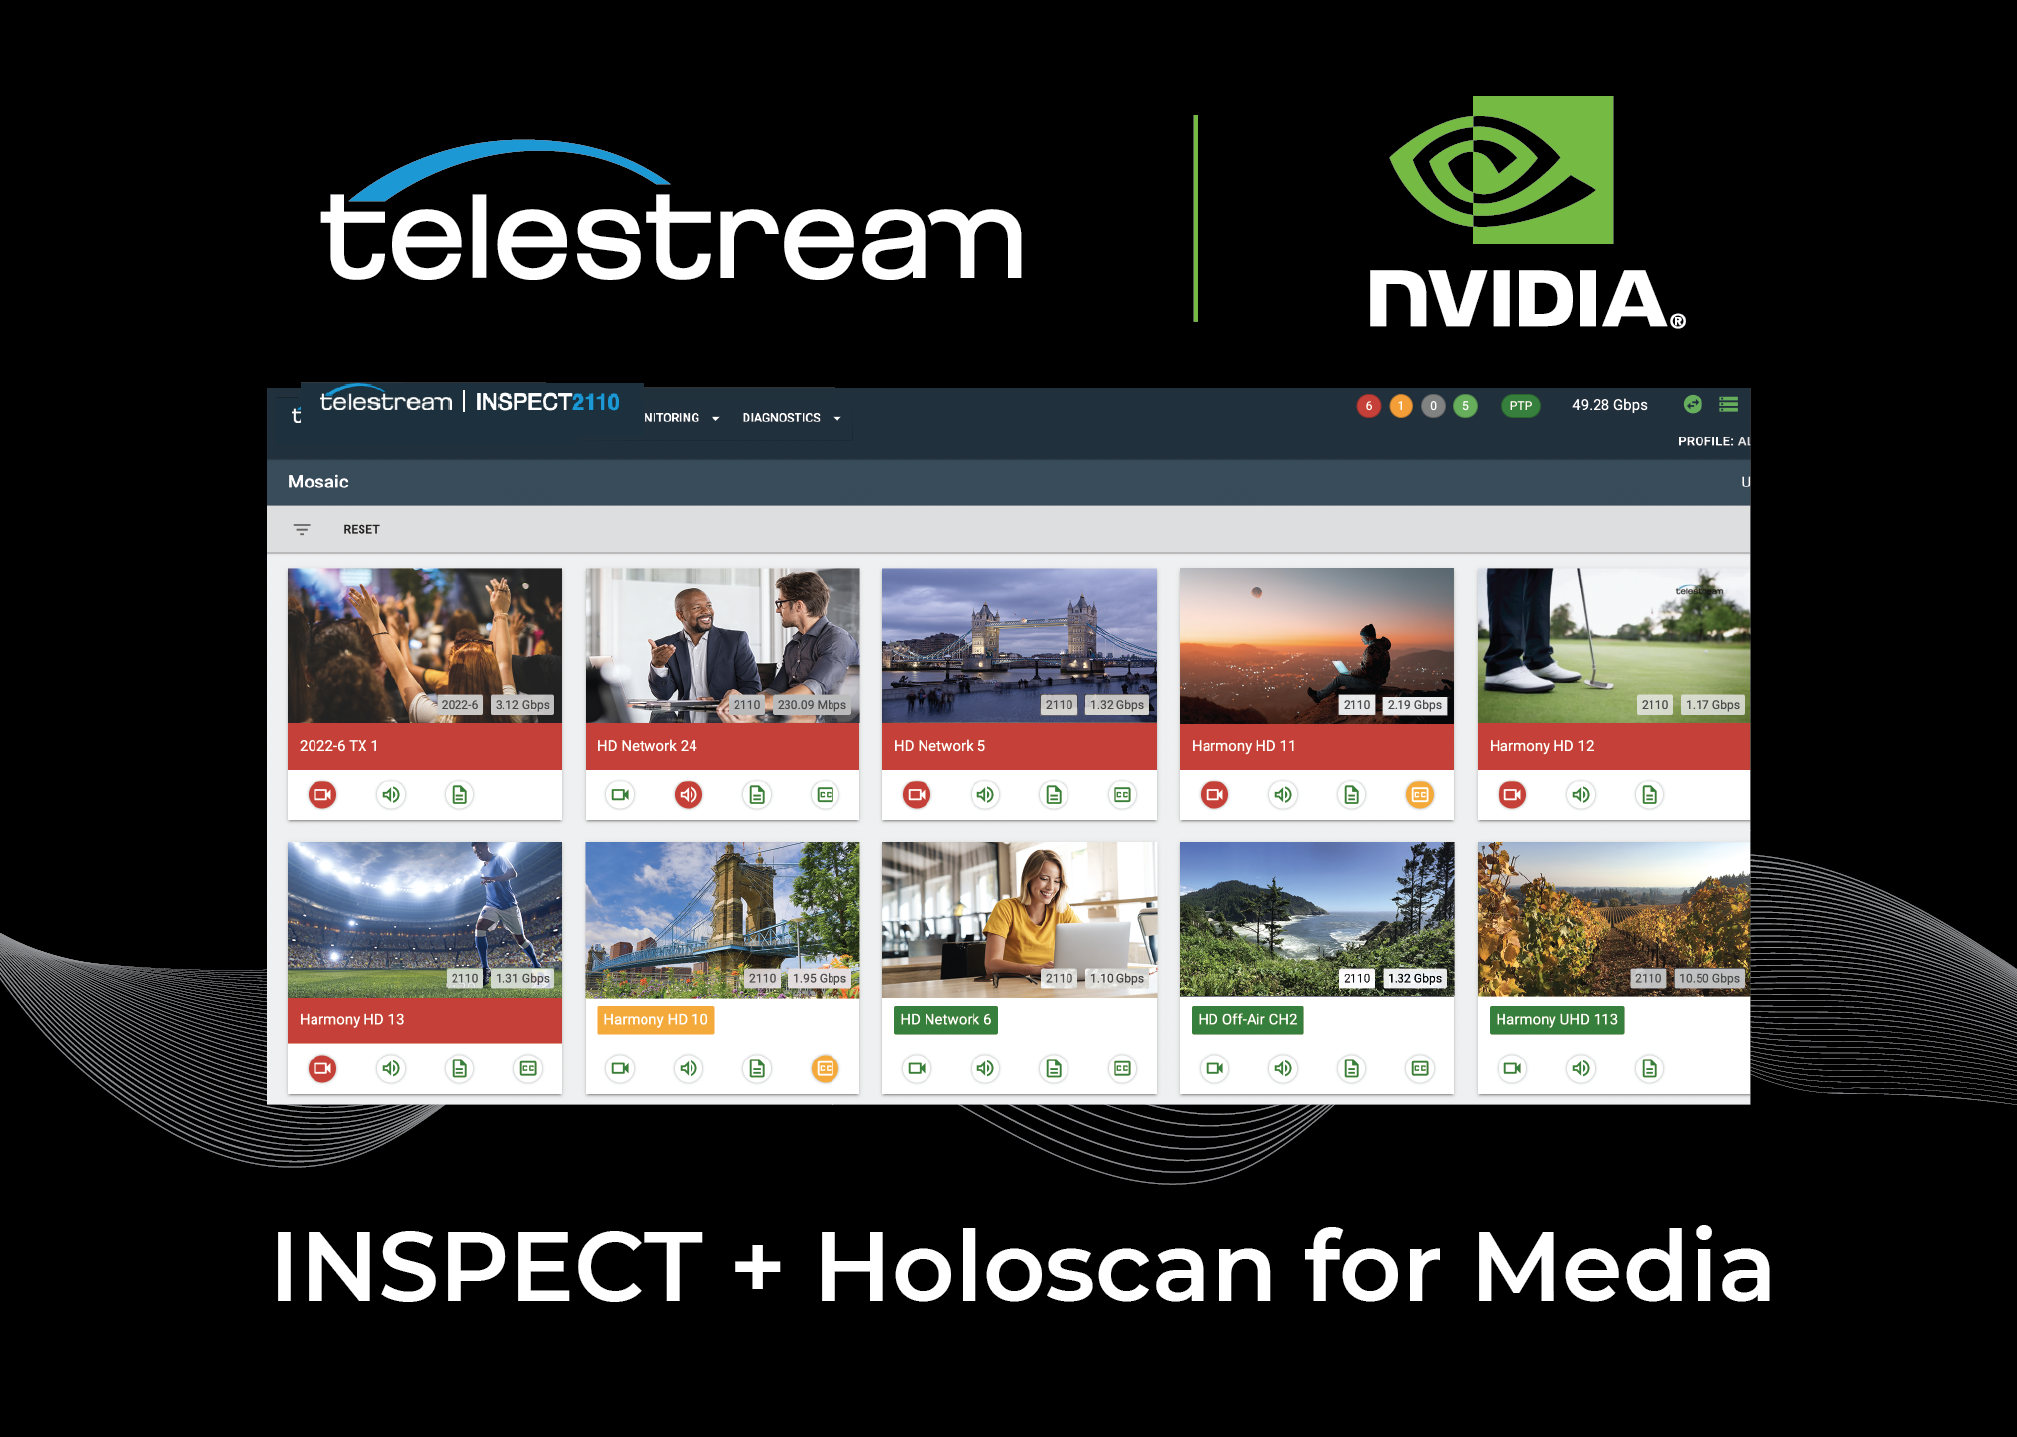 Telestream INSPECT-NVIDIA Holoscan for Media - PR image